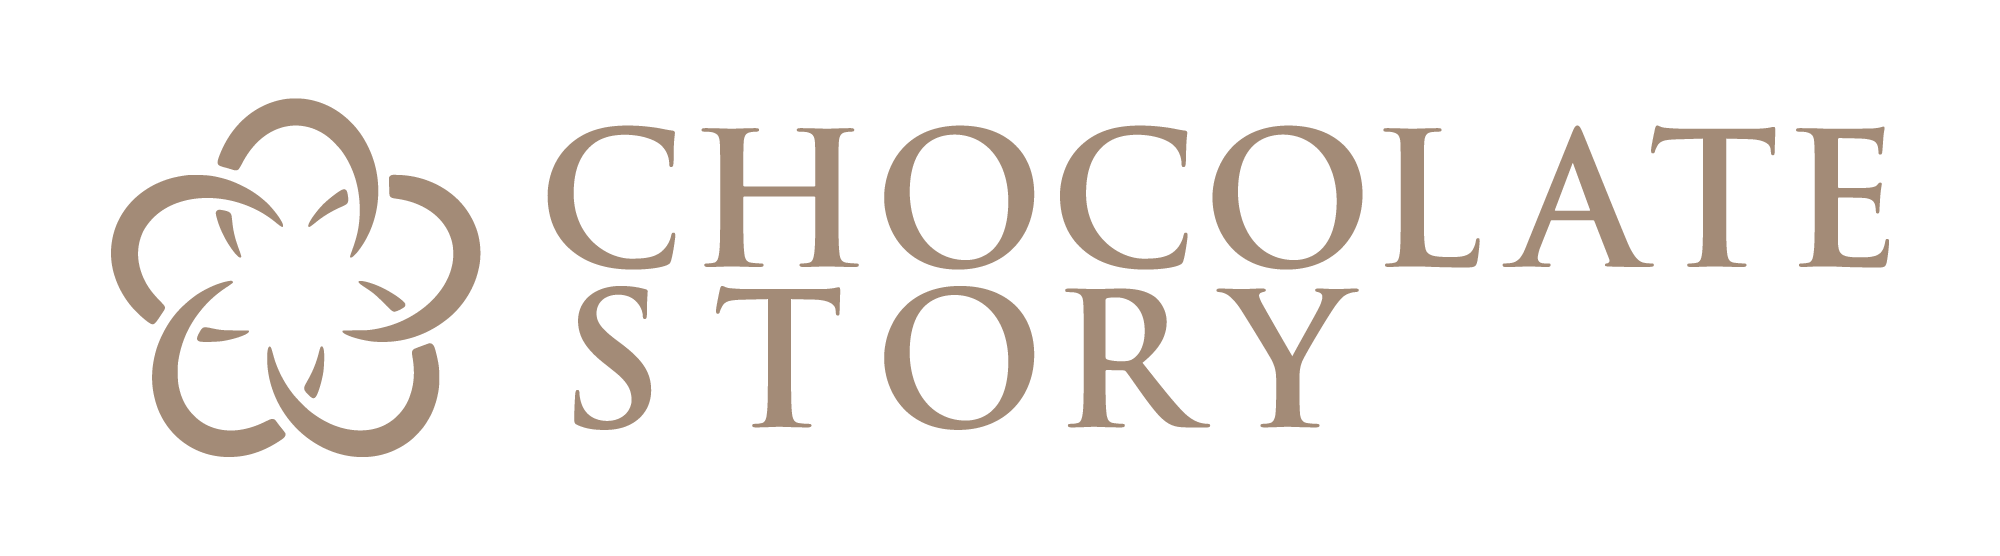 CHOCOLATE STORY